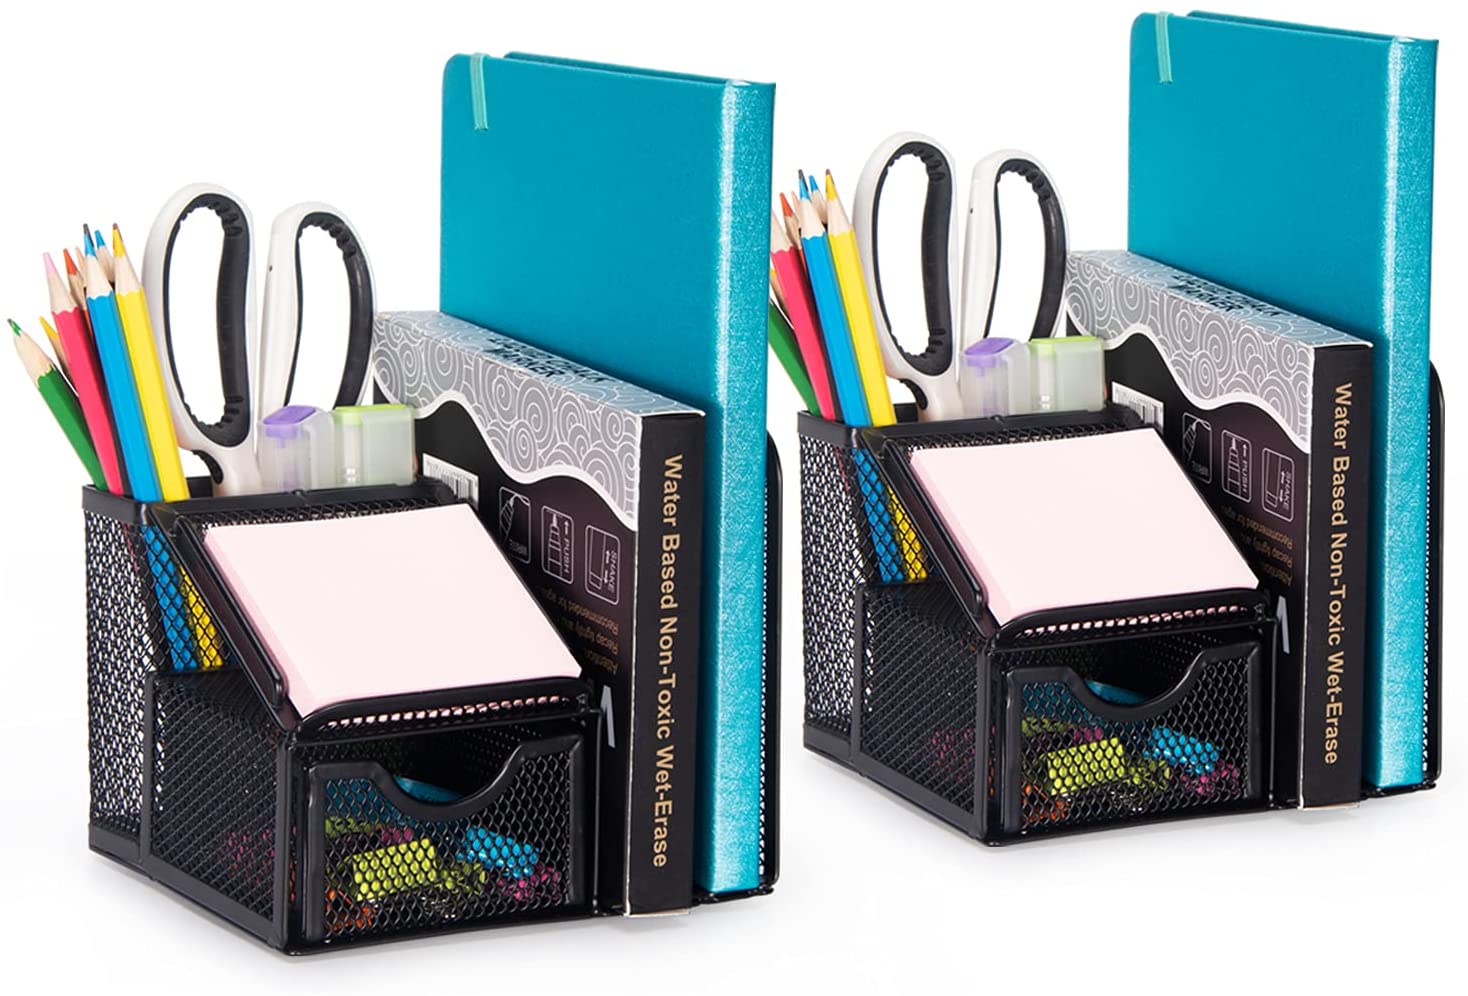 Comix Mesh Office Supplies Desk Organizer, Desktop Pencil Holder with Note Pad Holder- 2 pack Black